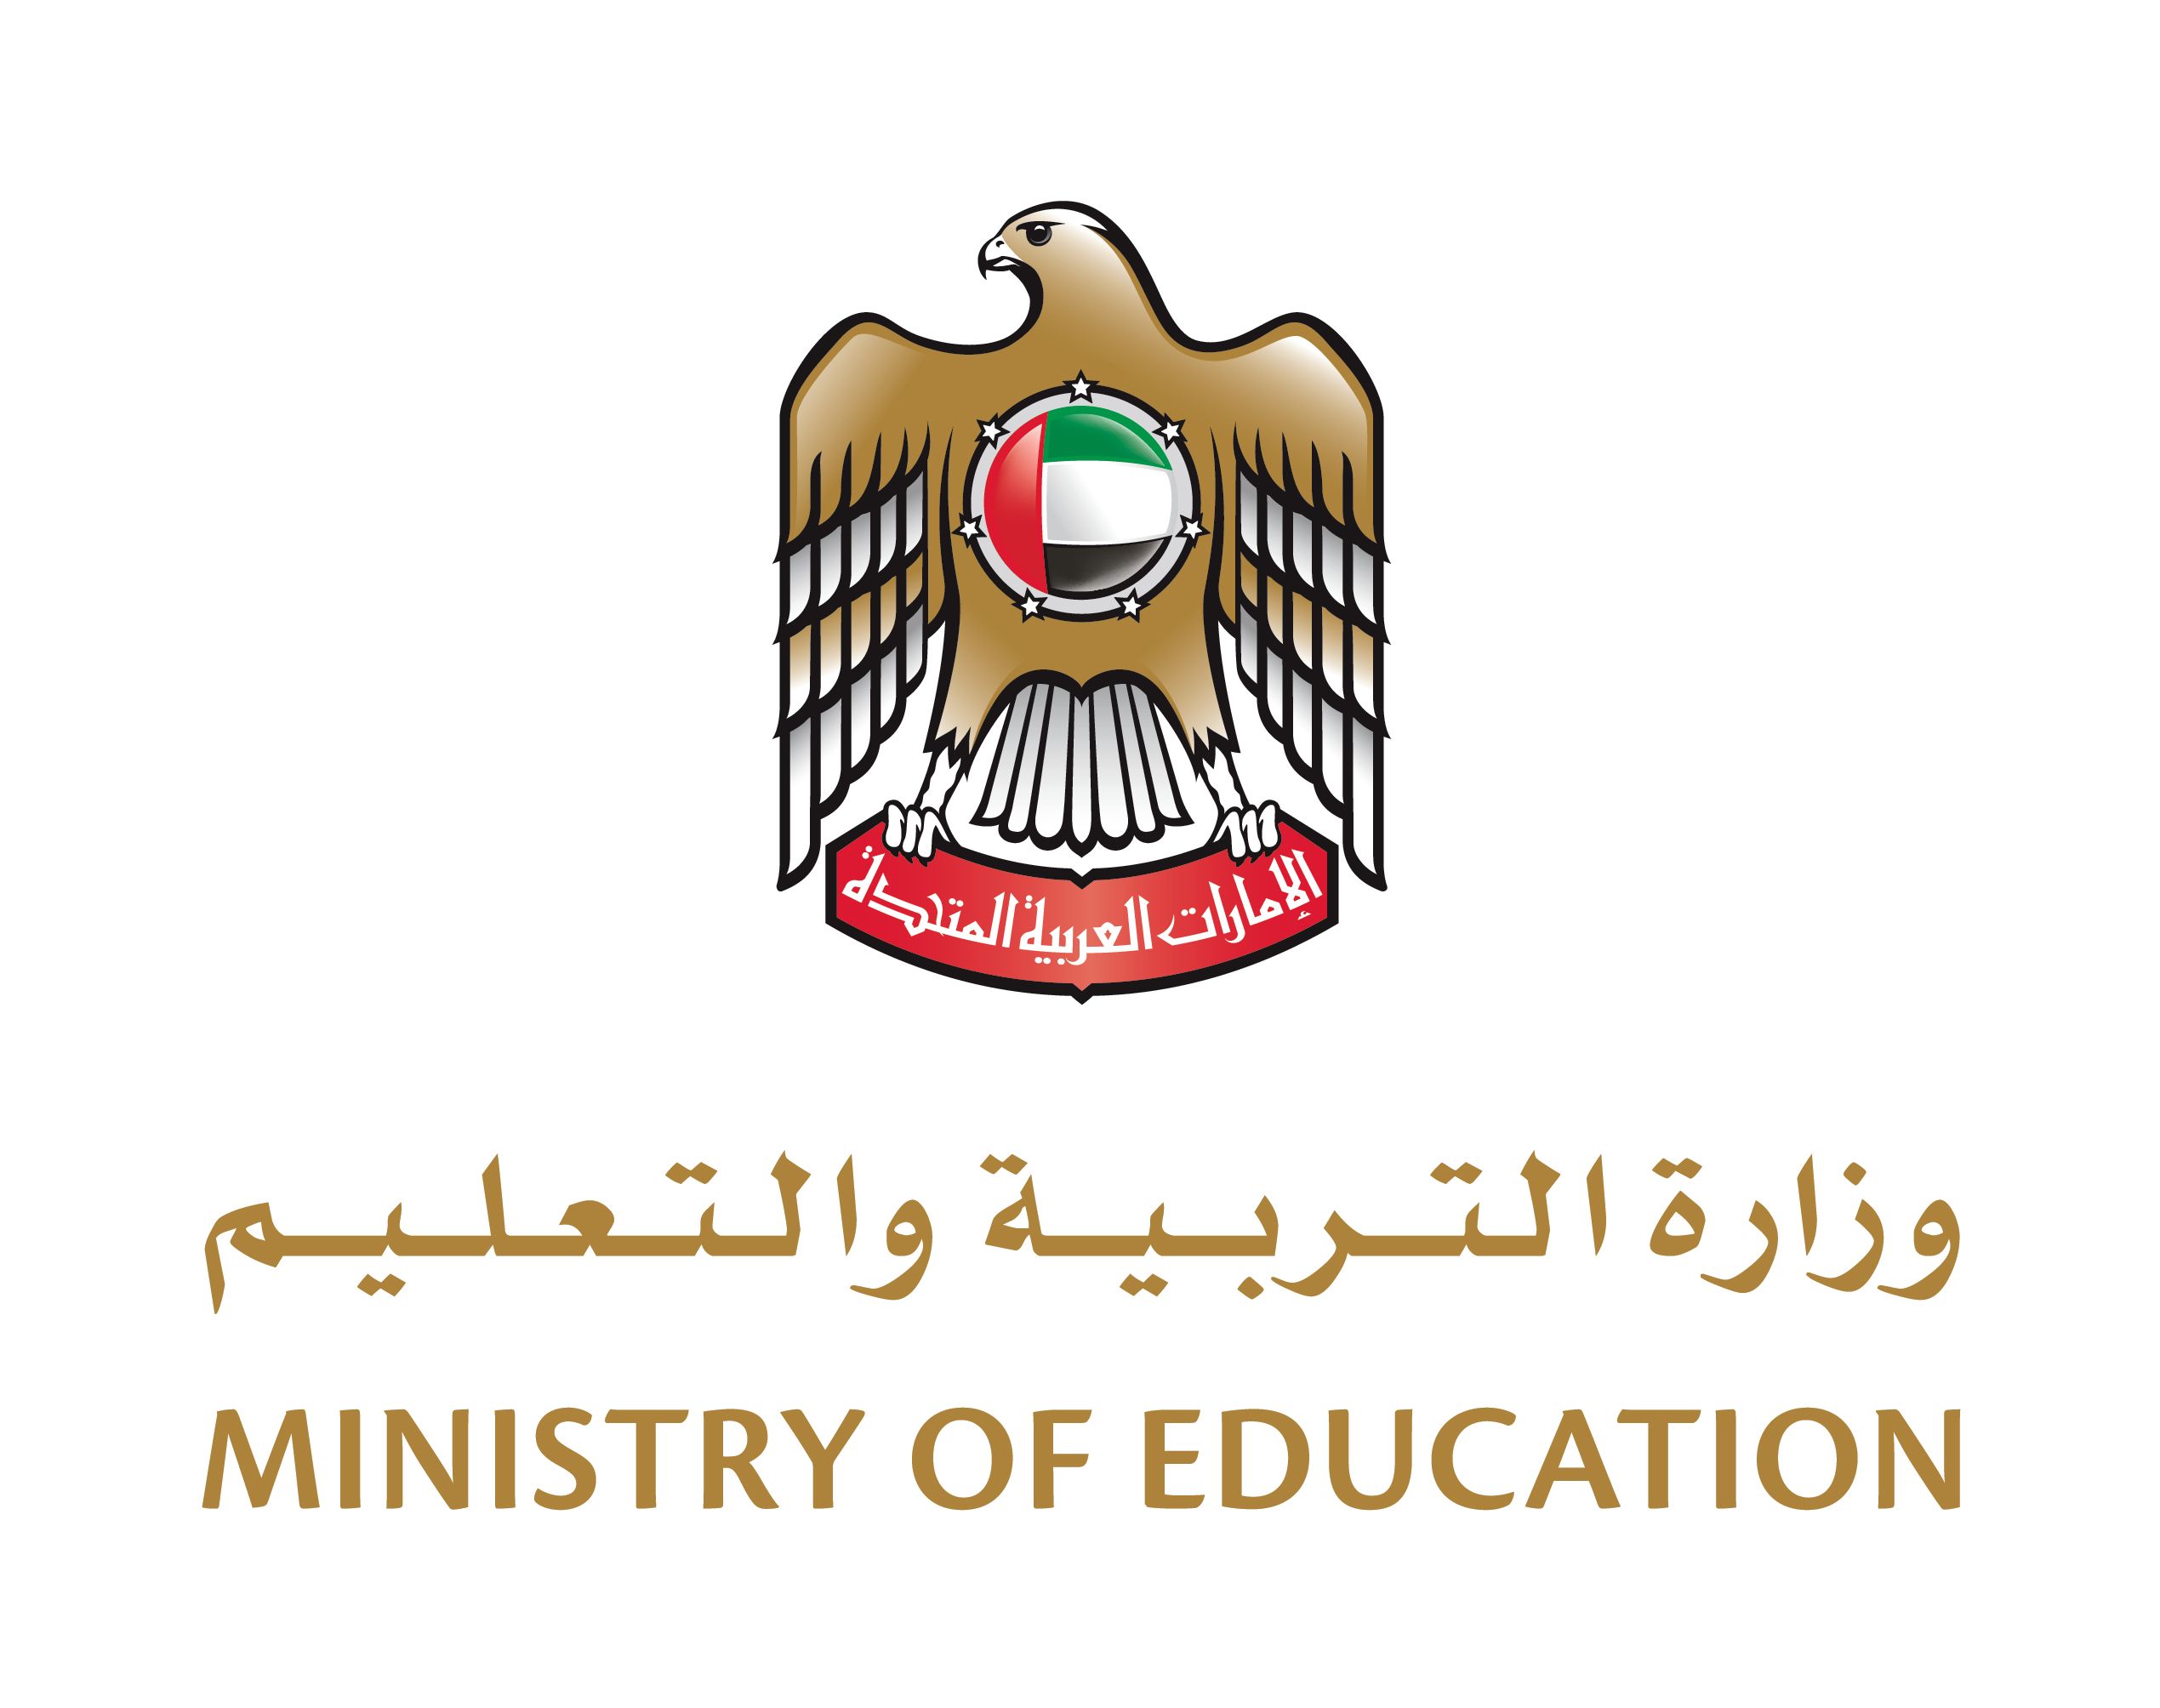 Ministry of Education of United Arab Emirates